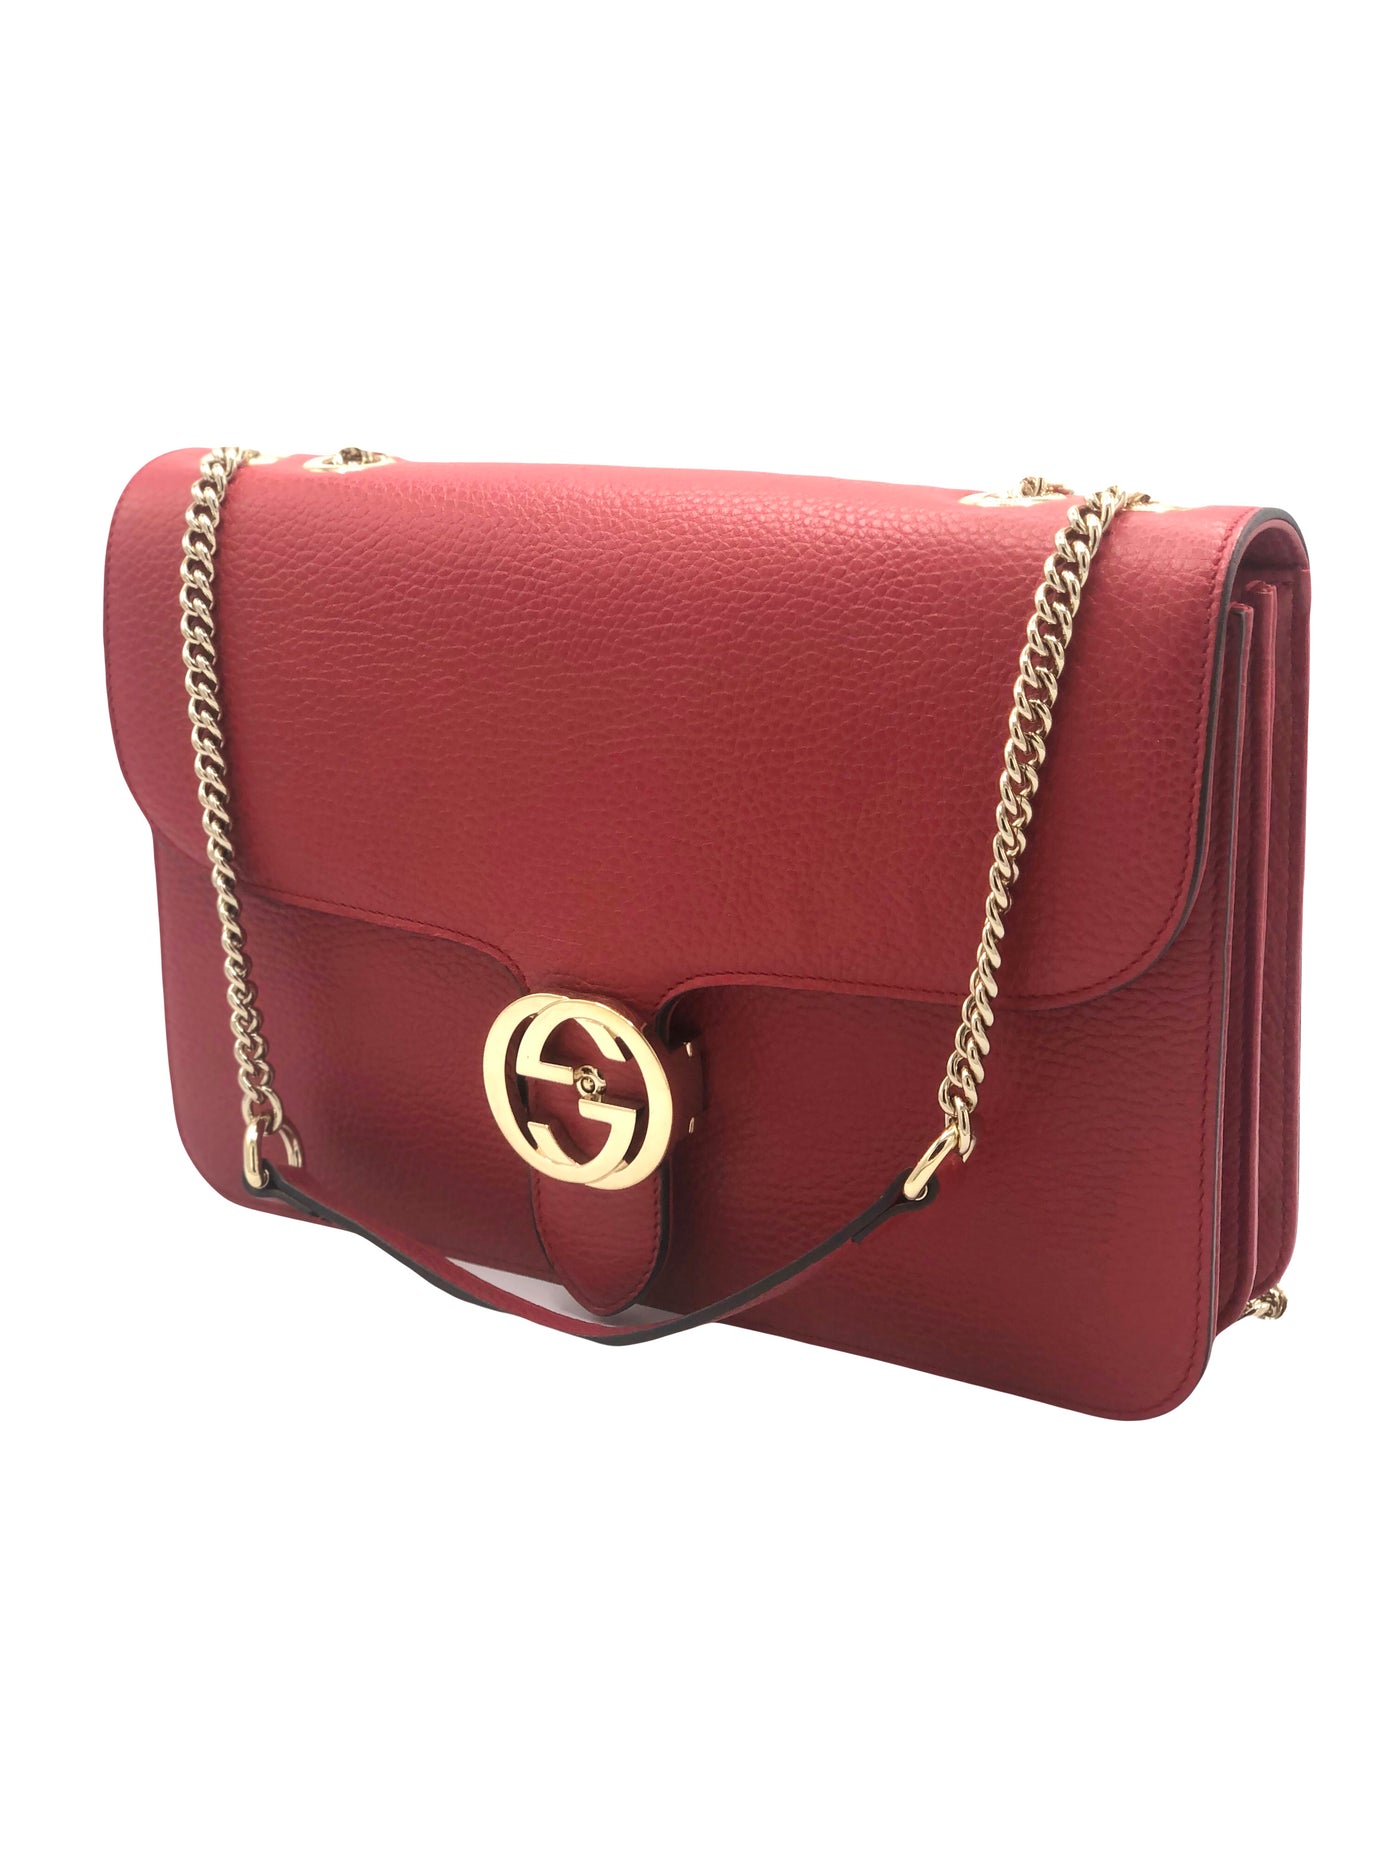 GUCCI red large interlocking grain calfskin handbag with gold chain